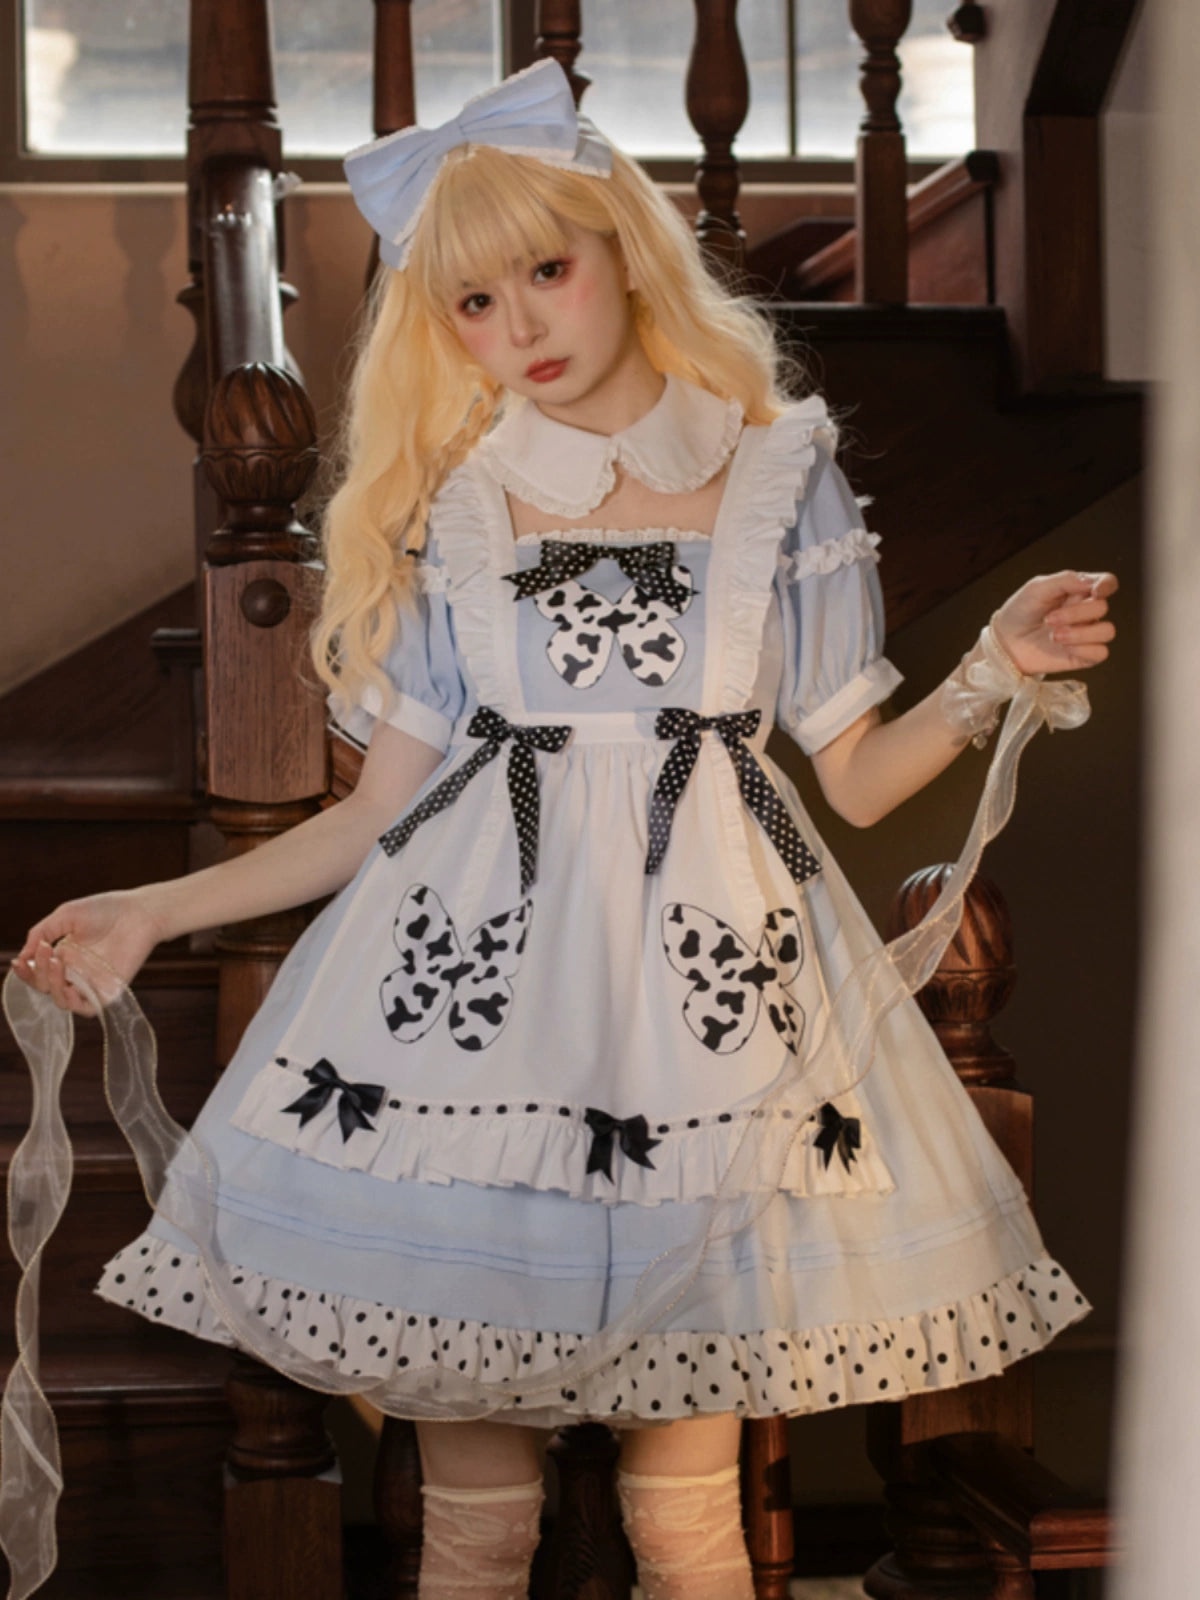 Blue Sweet Princess Lolita Dress